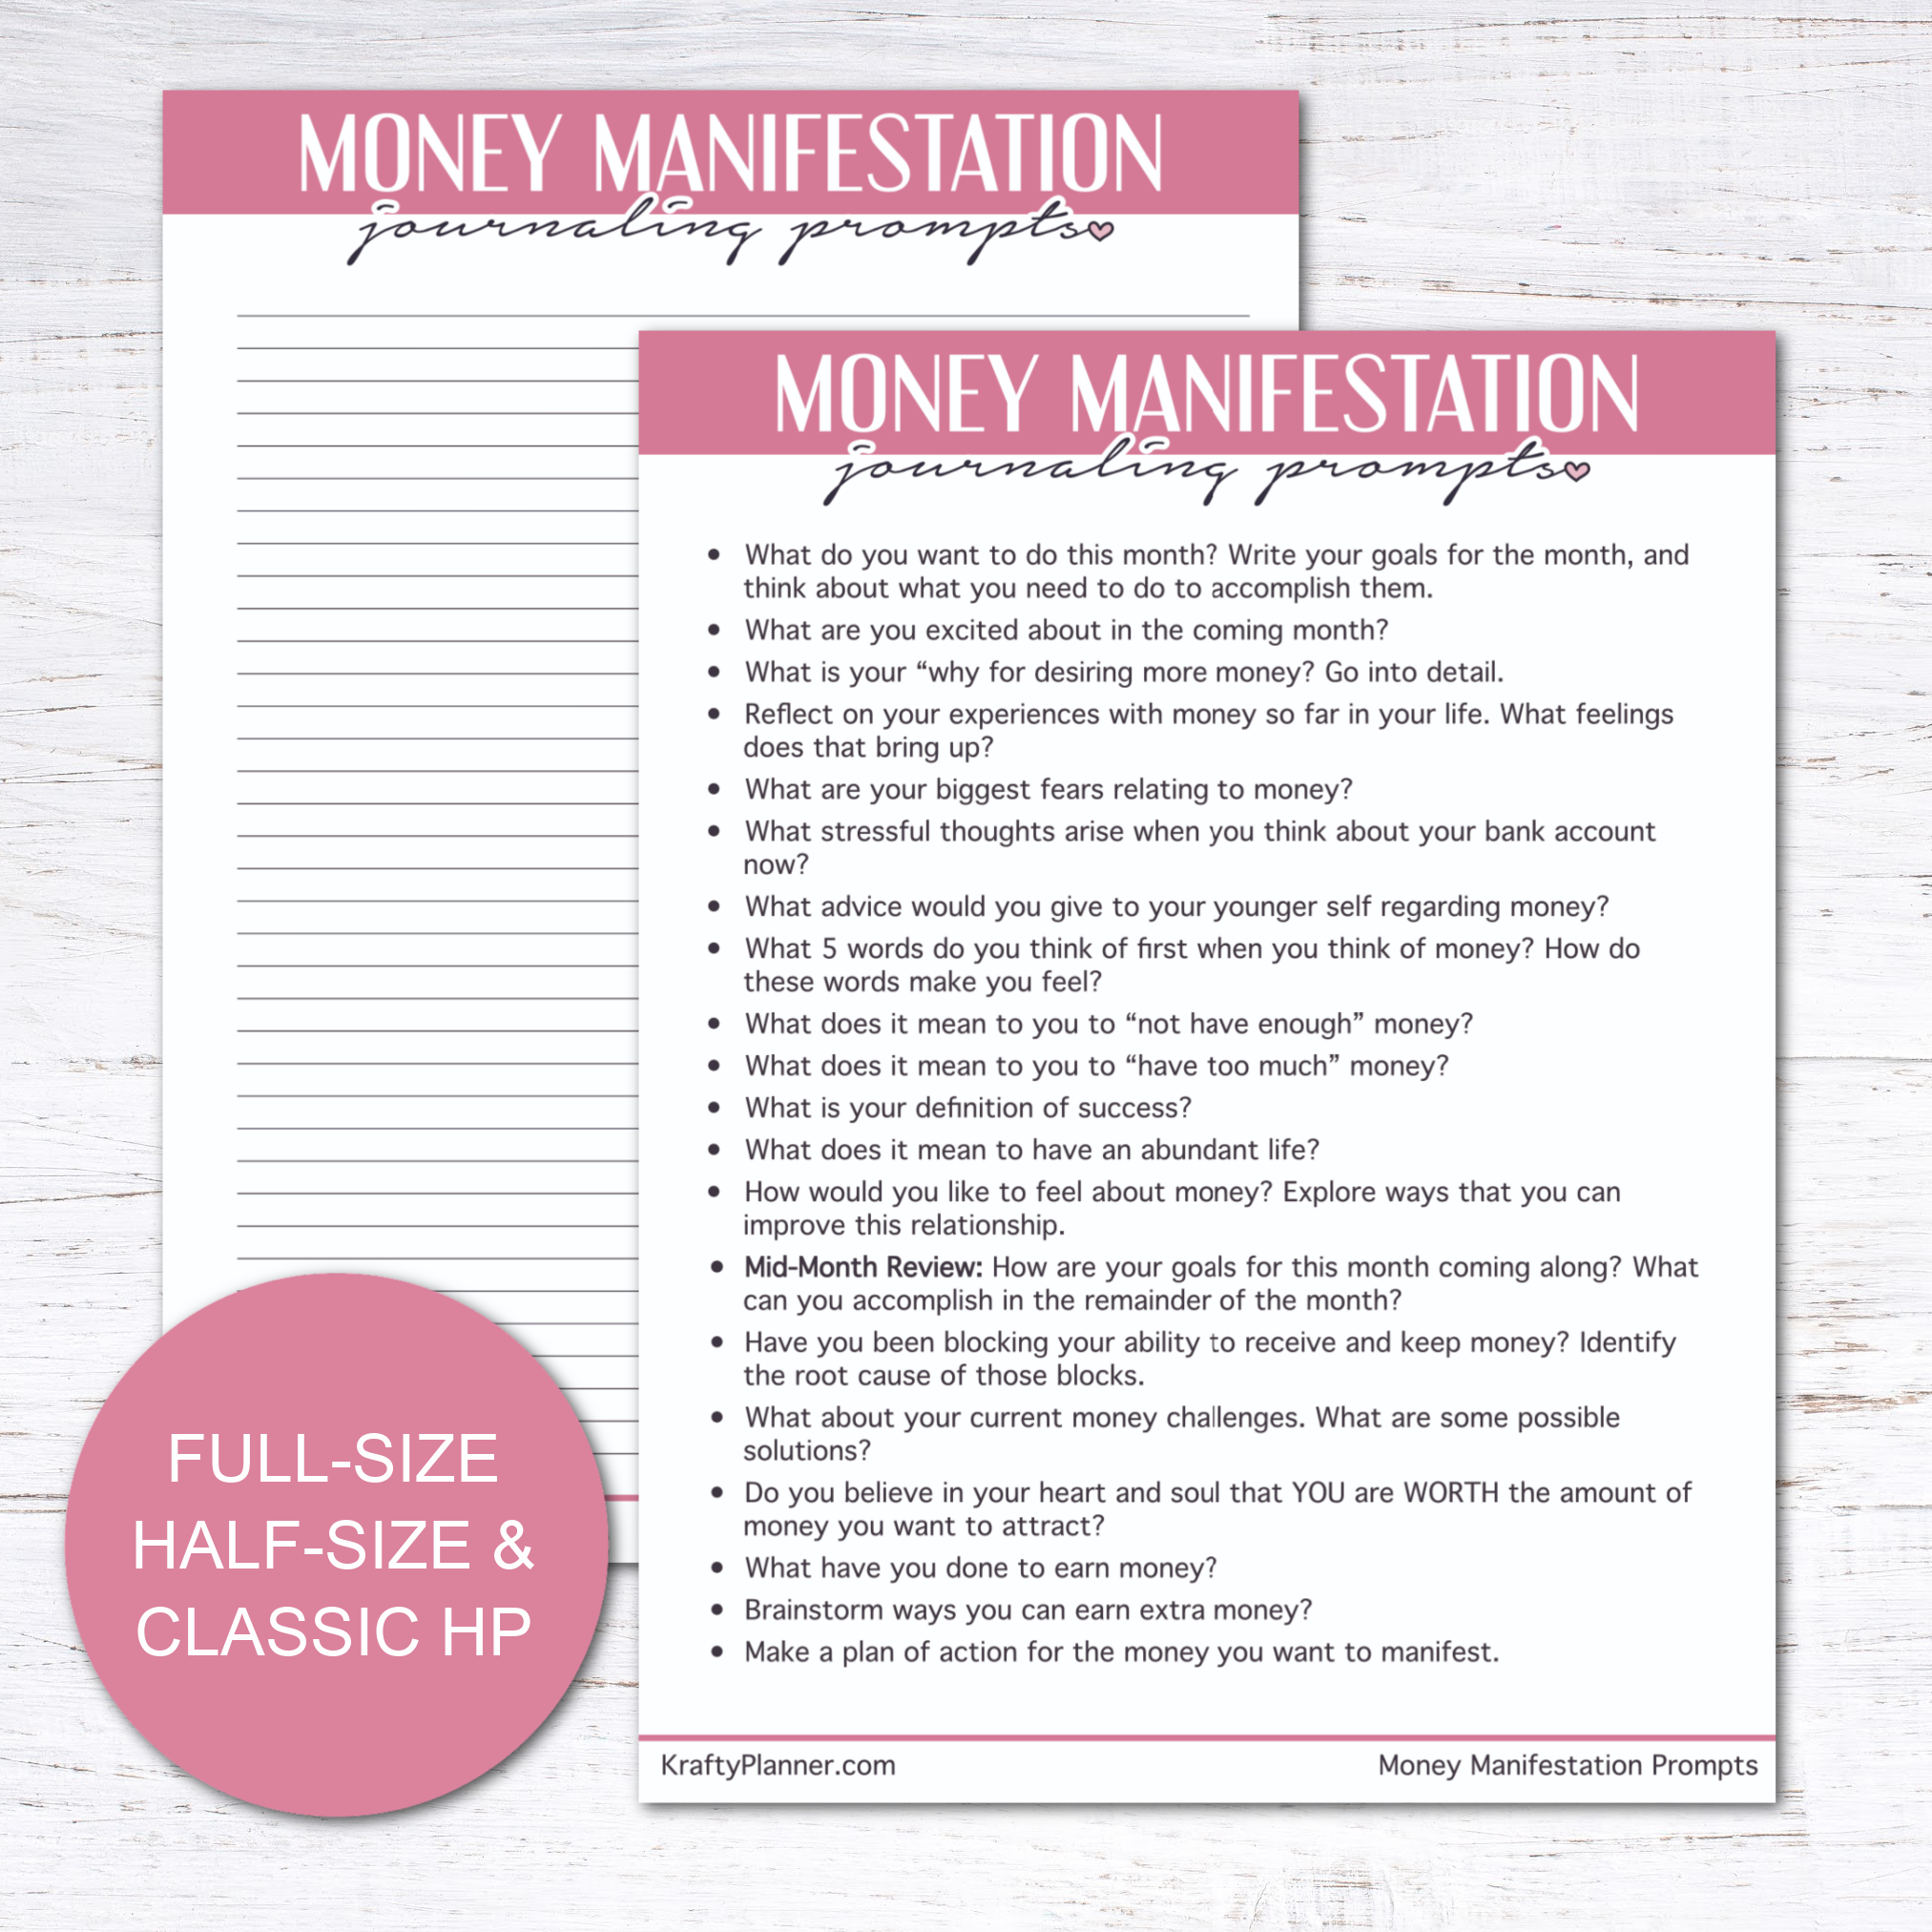 Money Manifestation Journaling Prompts for September 2021